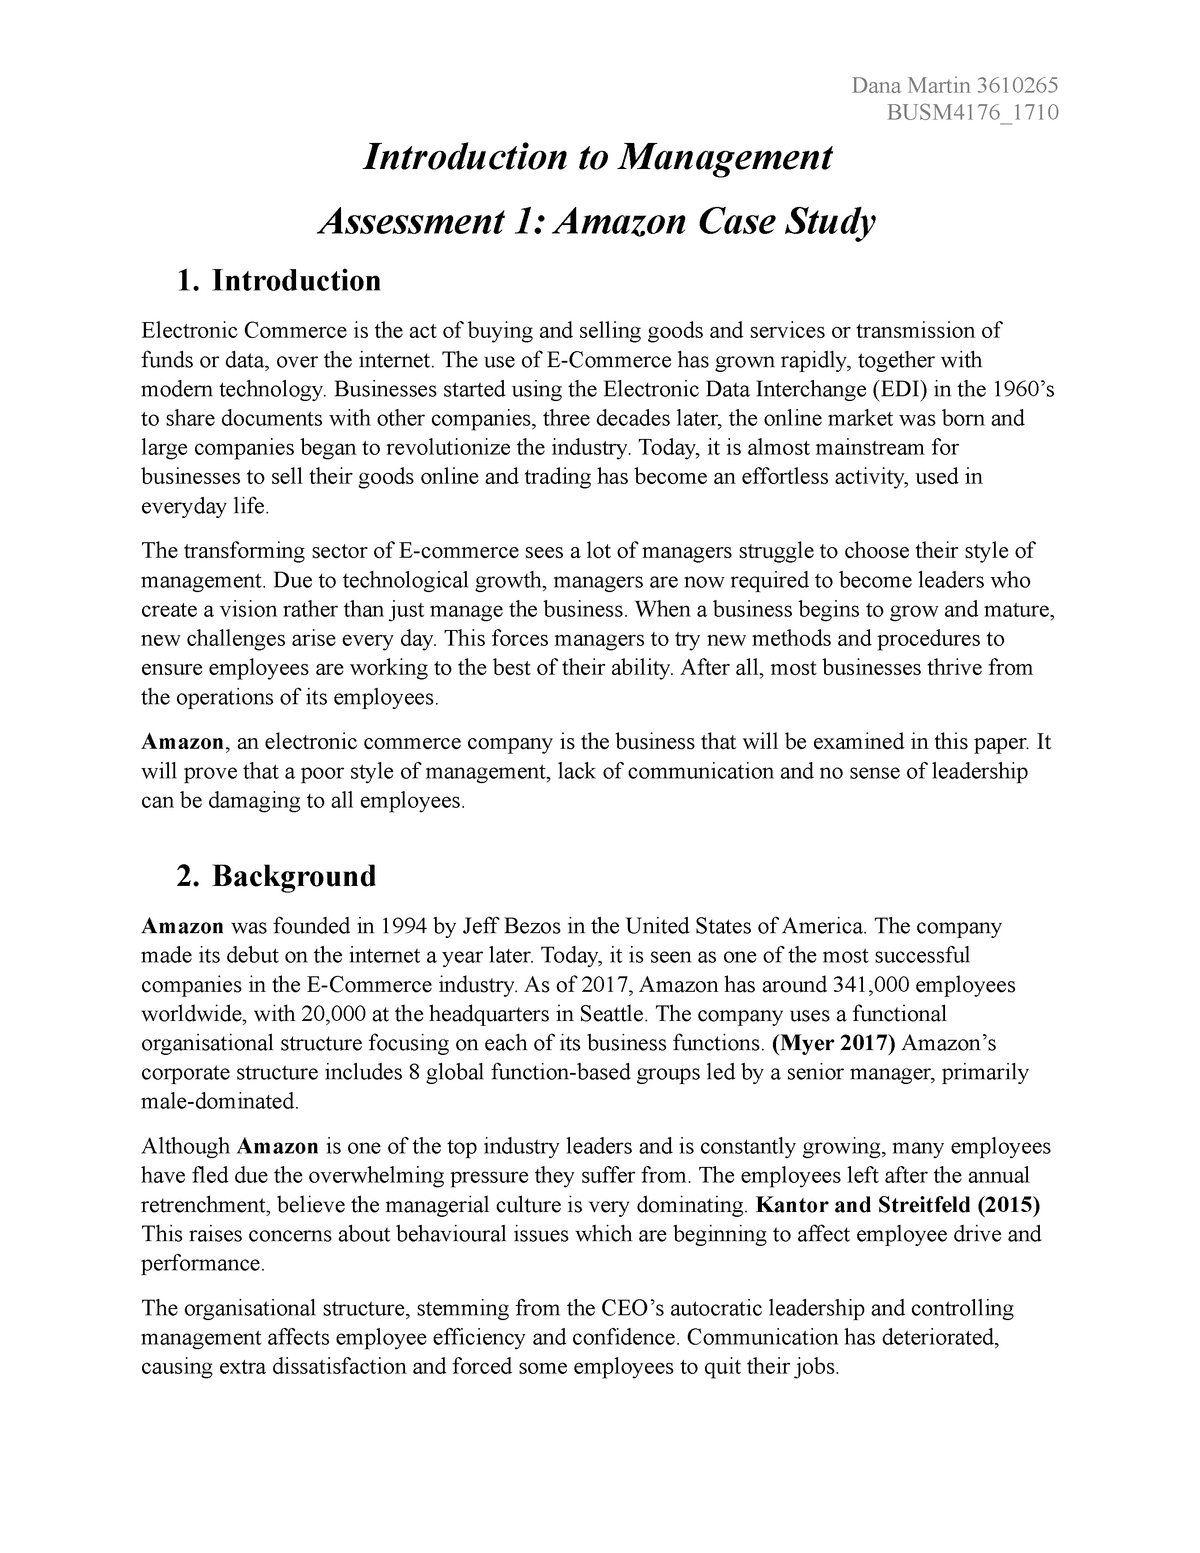 case study introduction sample pdf